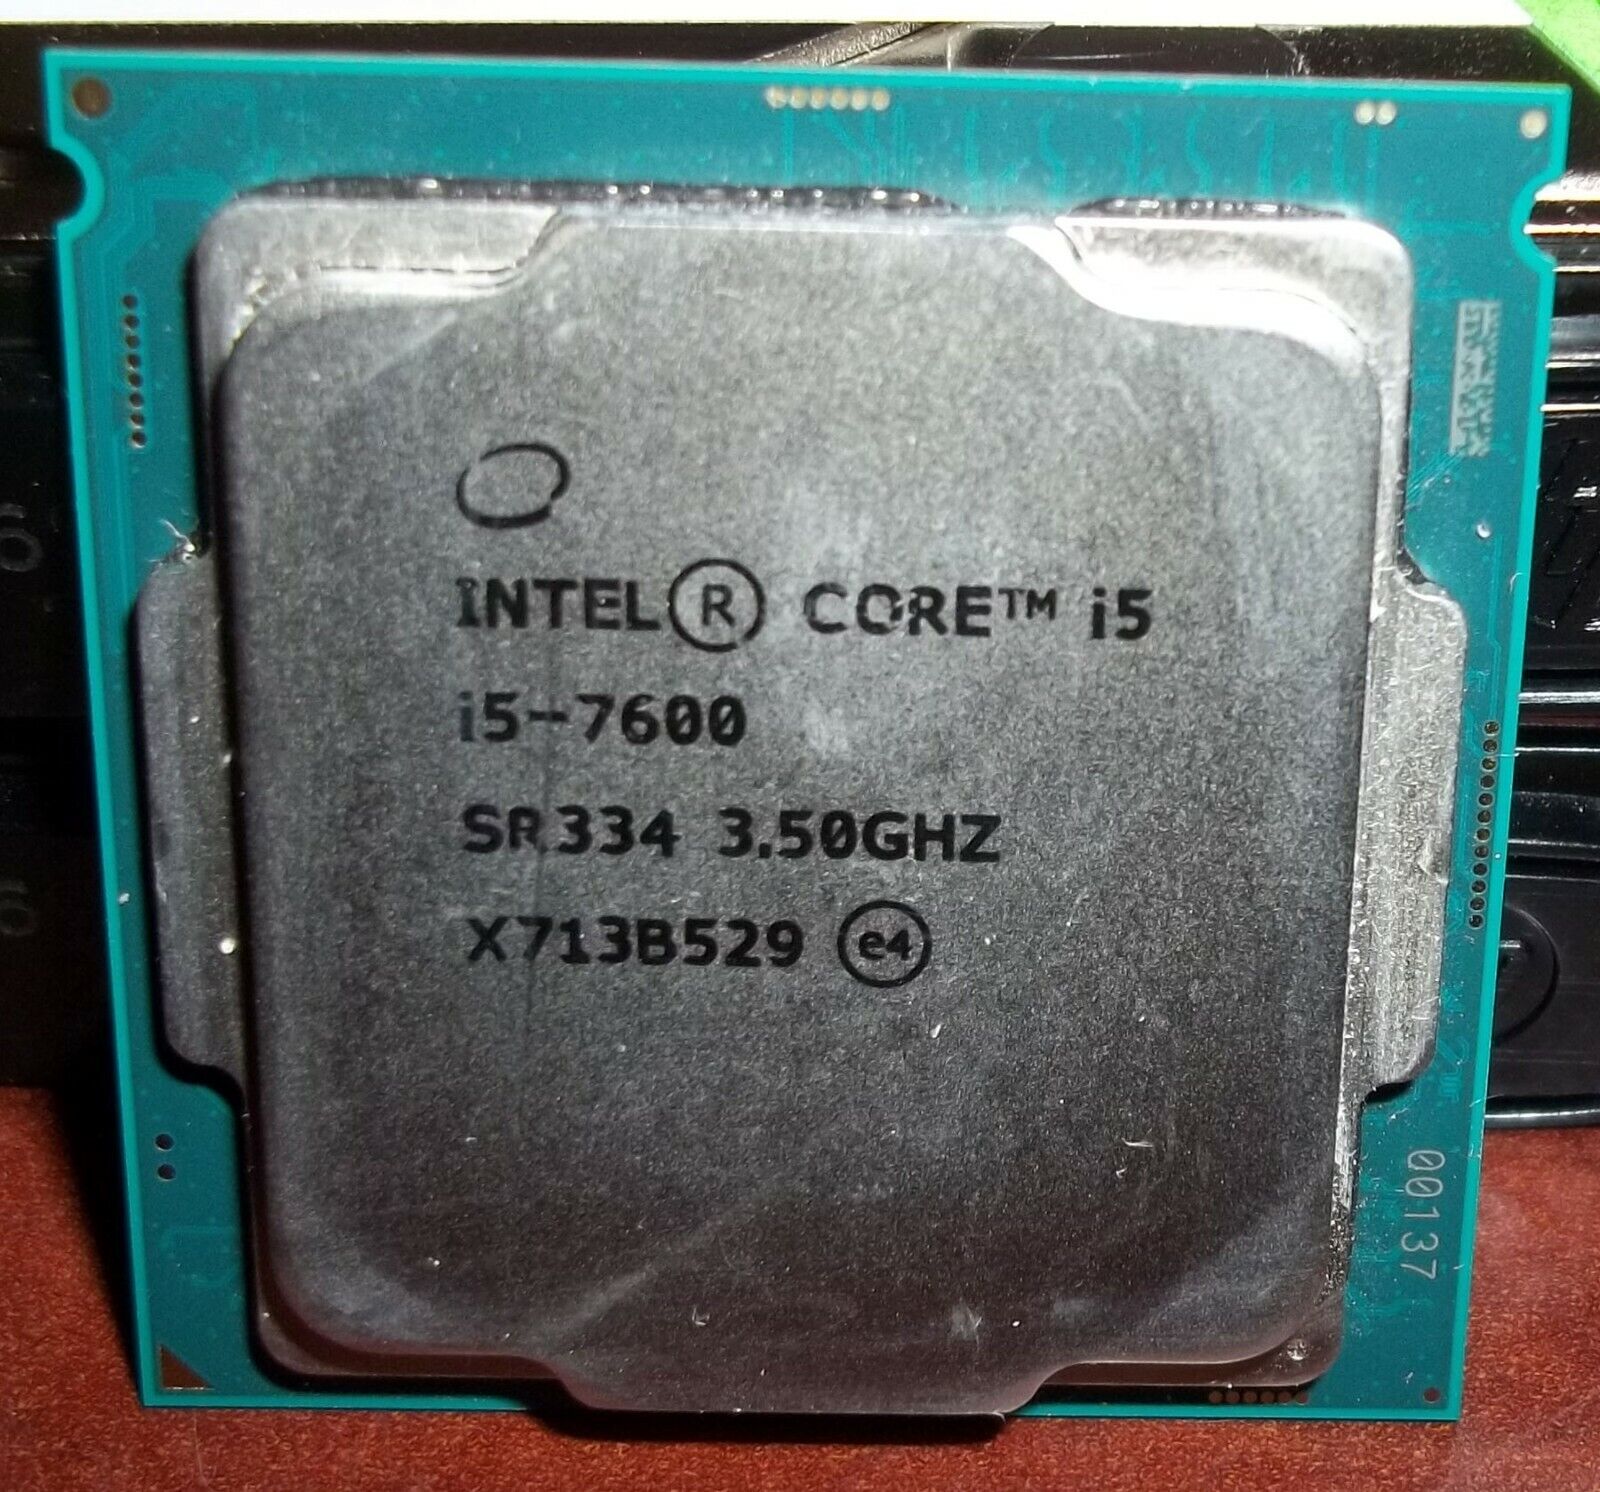 Intel SR334 Processor i5-7600 3.50 GHz  